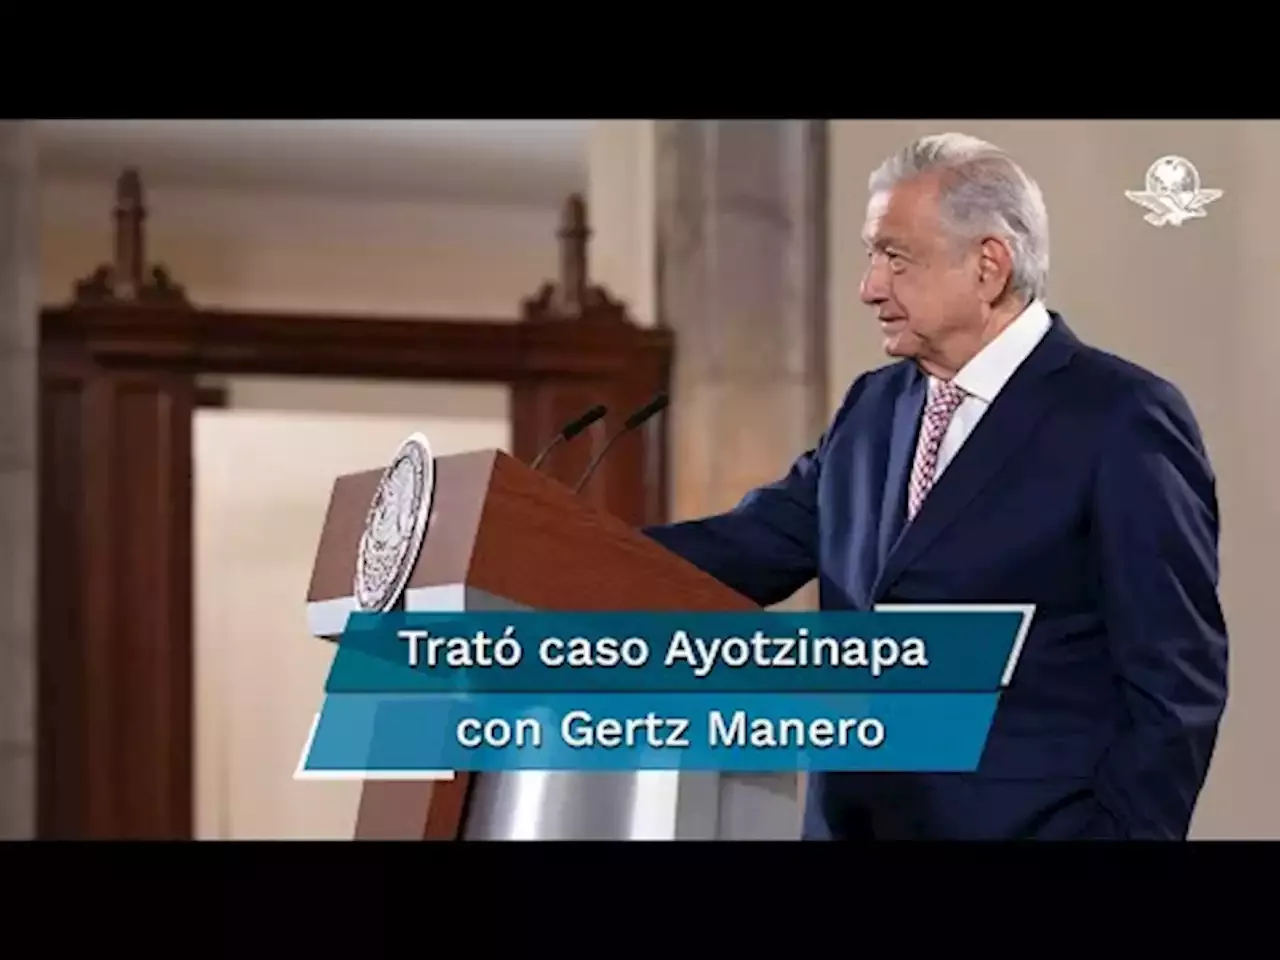 Confirma AMLO que se reunió con el fiscal Gertz Manero; no tocaron tema de audios filtrados